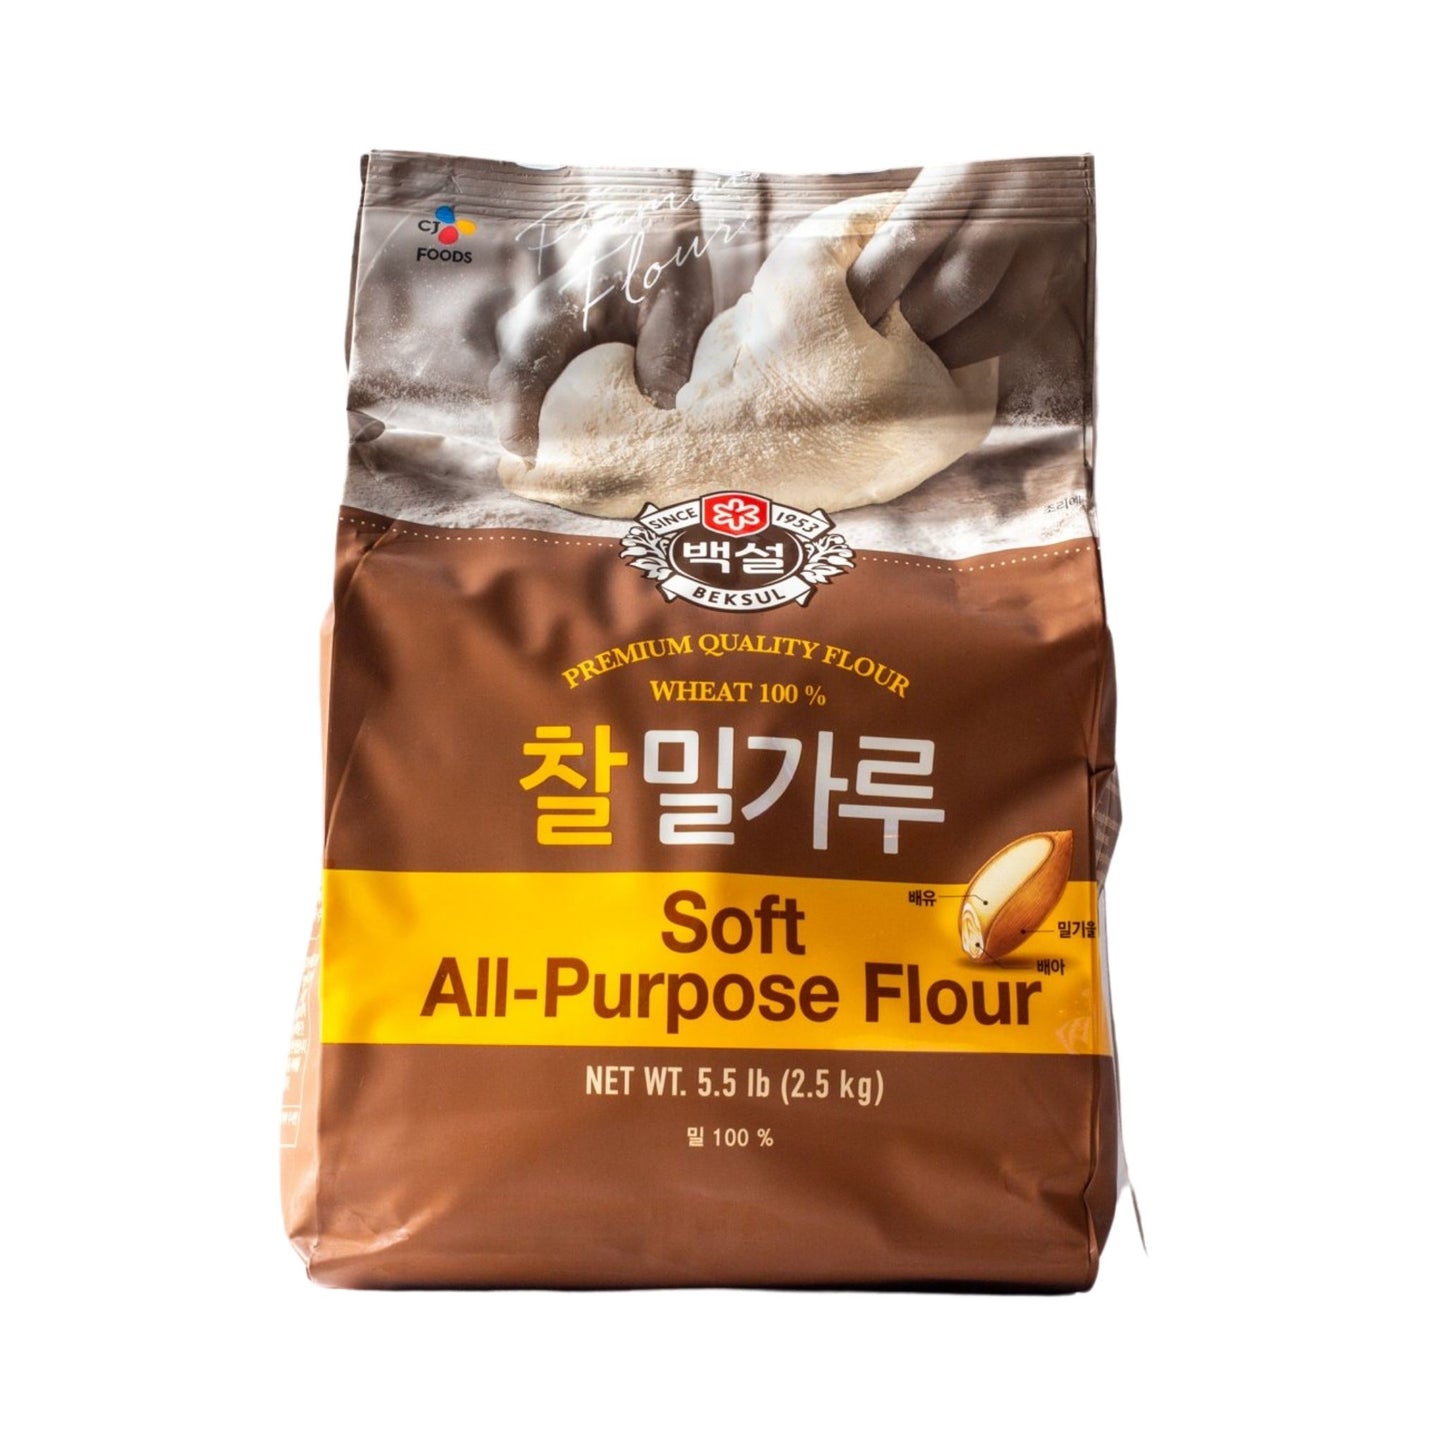 Soft All-Purpose Wheat Flour CJ 韩国中筋面粉 (5.5 LBS)